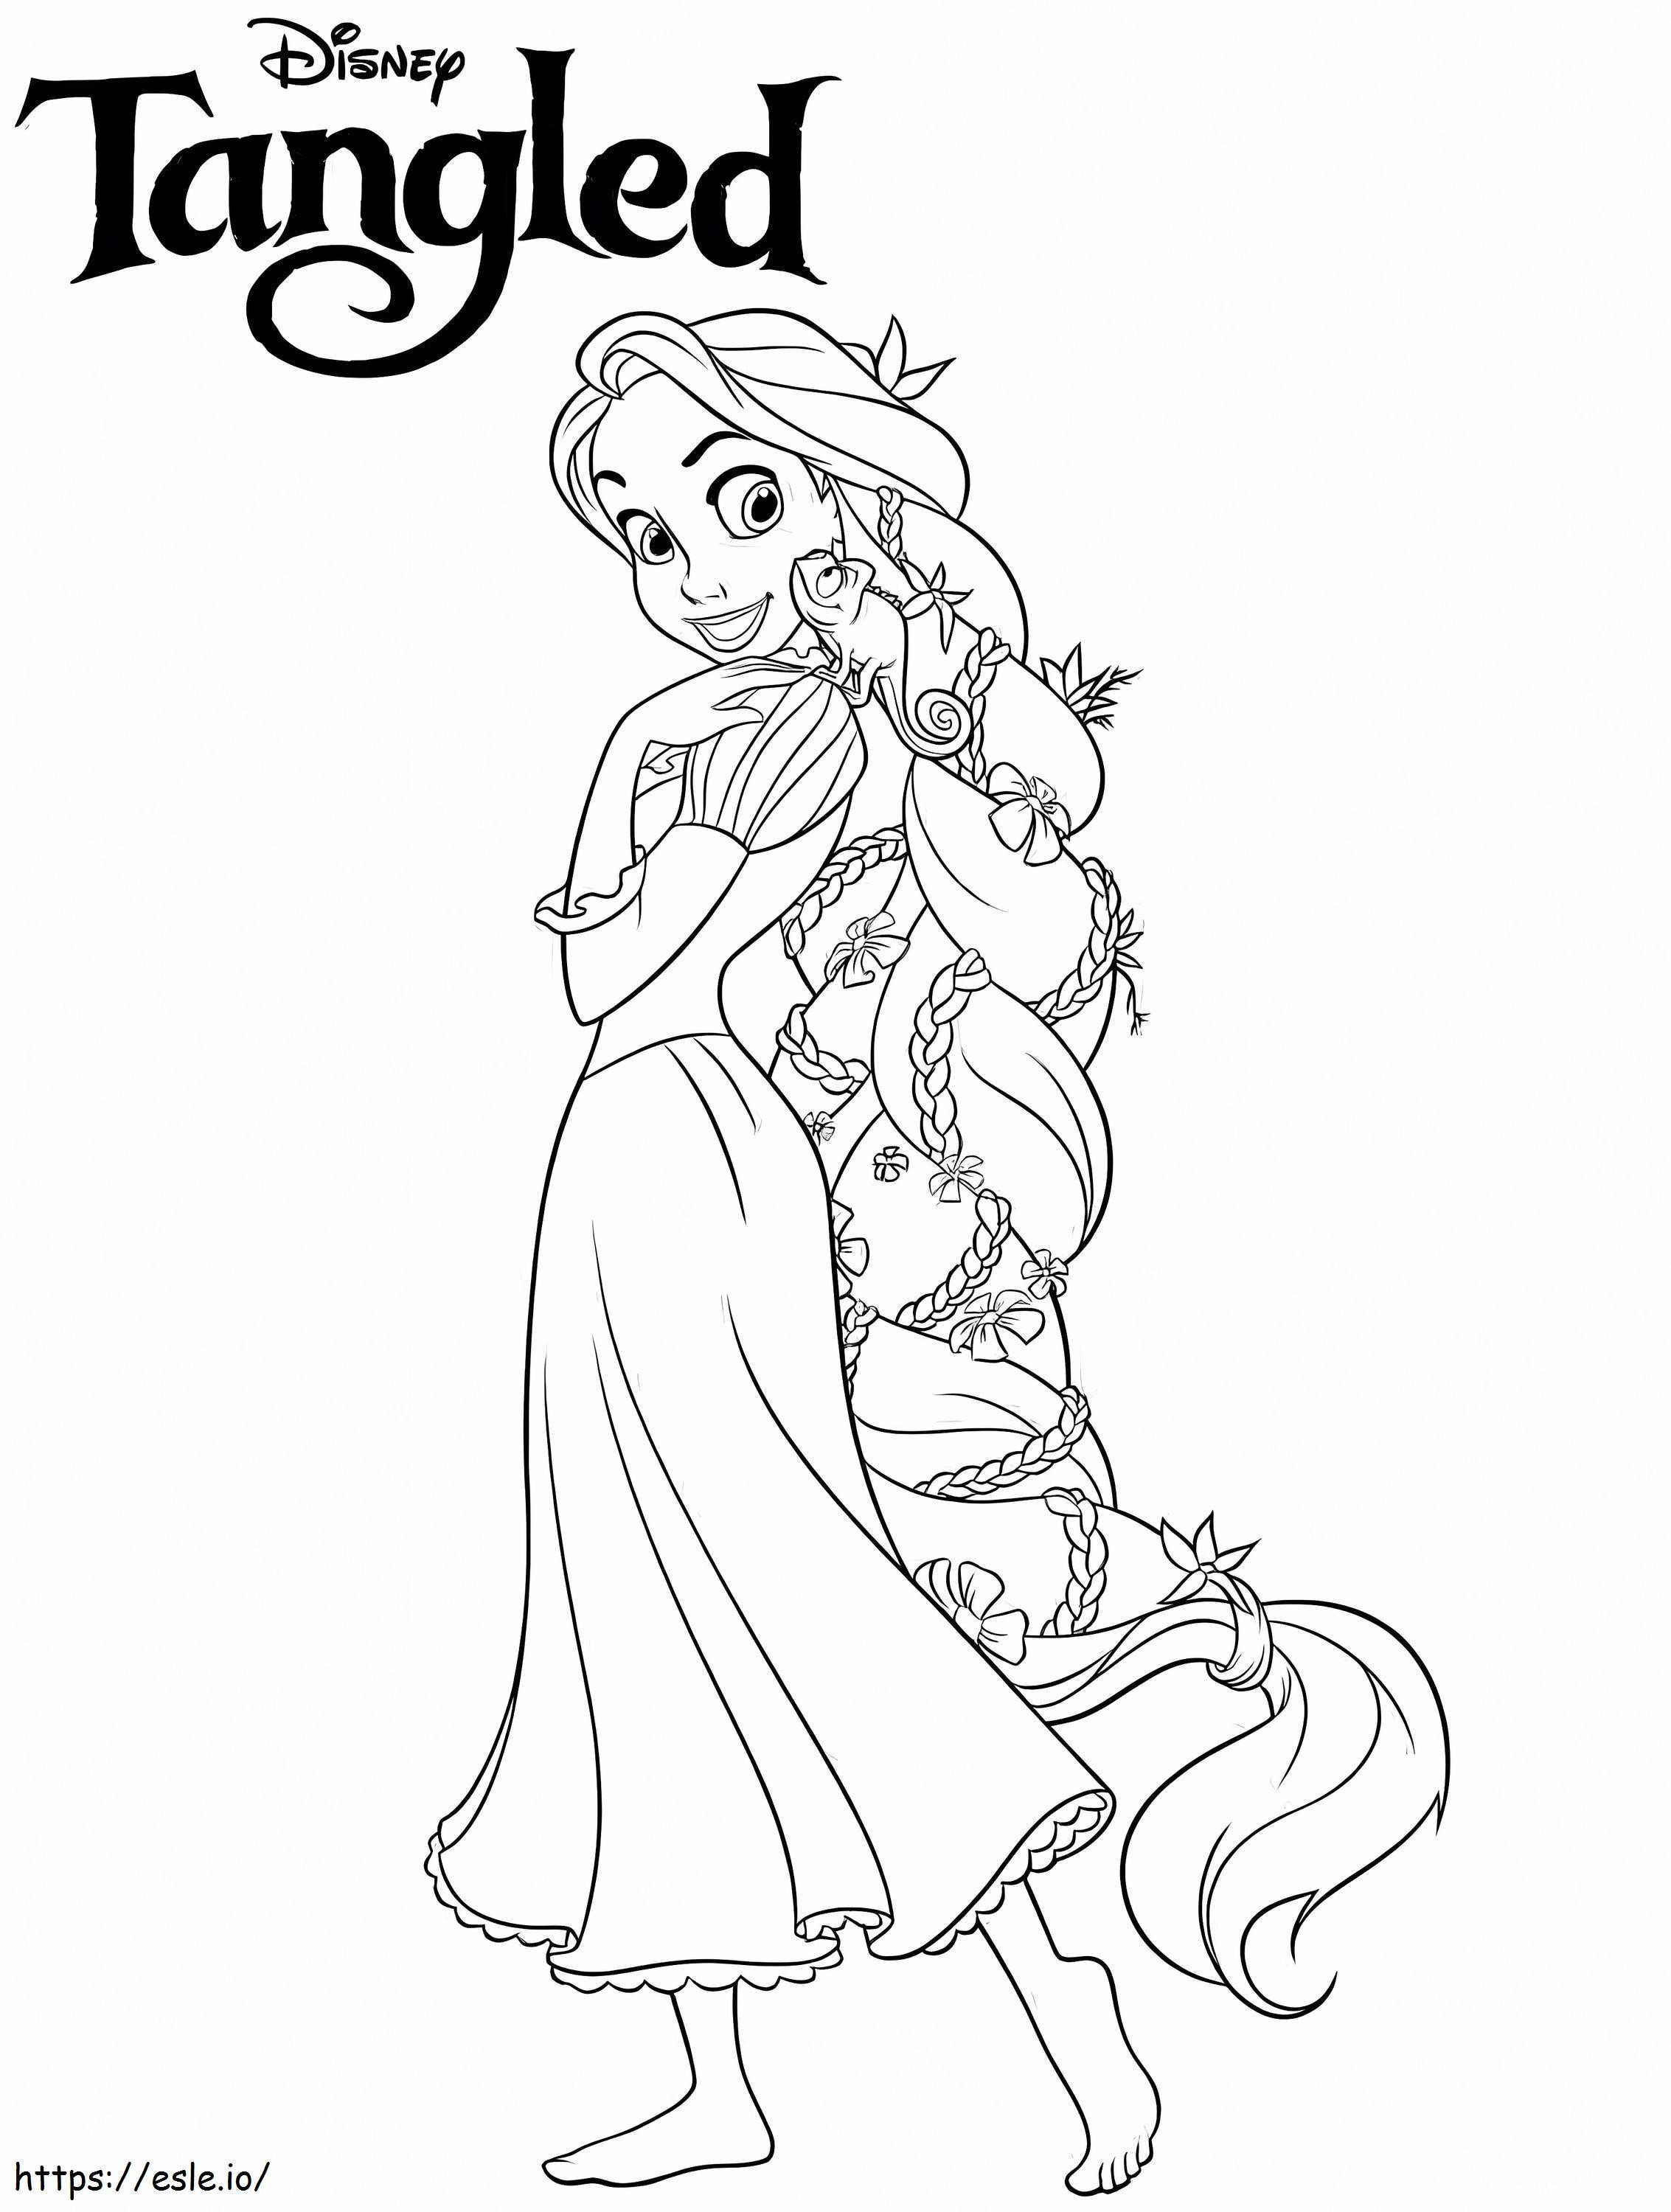 La bellissima principessa Rapunzel 3 da colorare